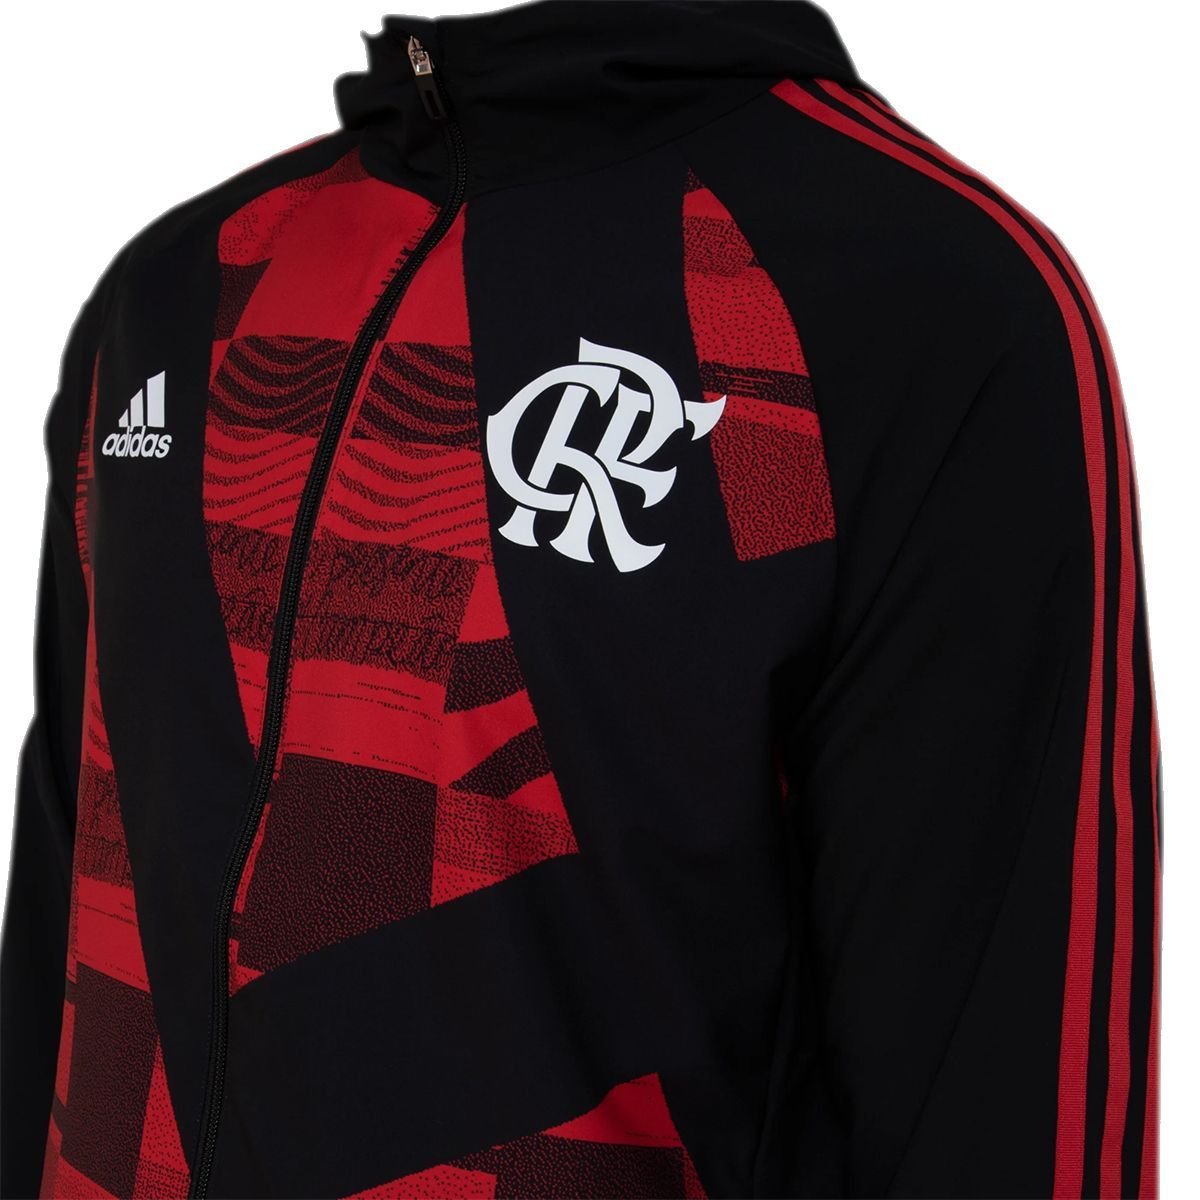 Jaqueta Adidas Corta-Vento CR Flamengo Masculina HS5241 - Ativa